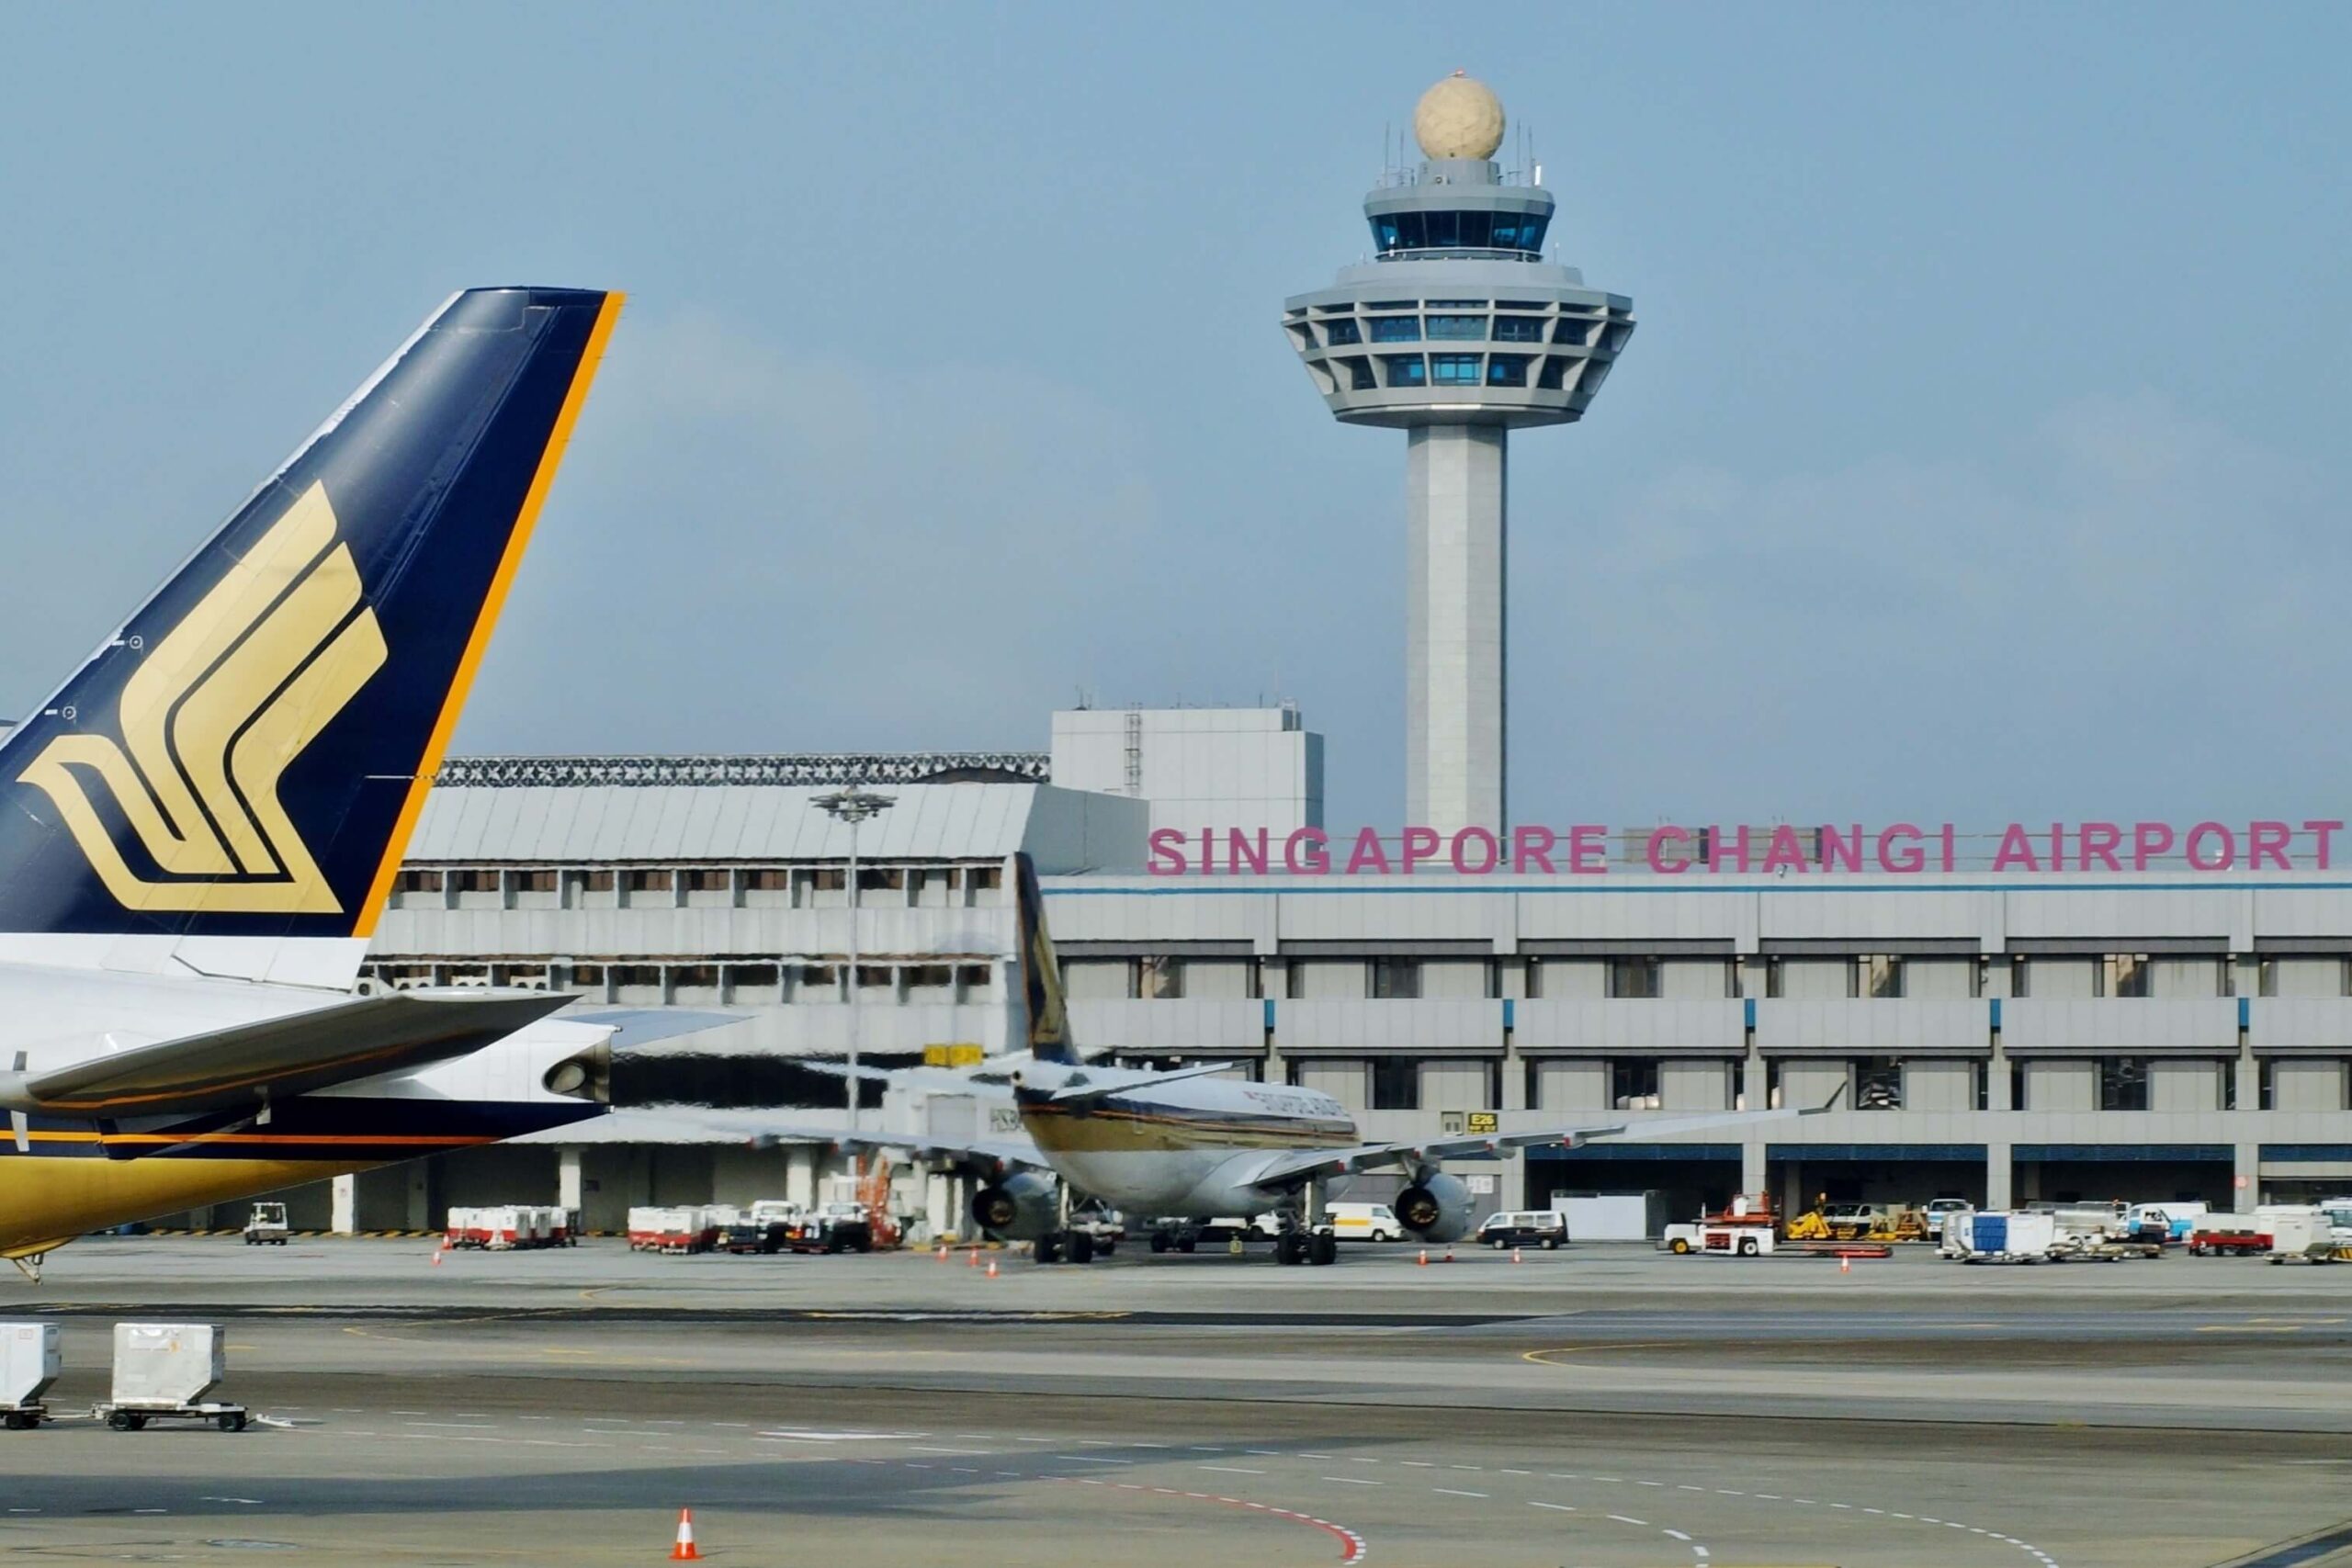 Terminal 5, Changi International Airport, Singapore